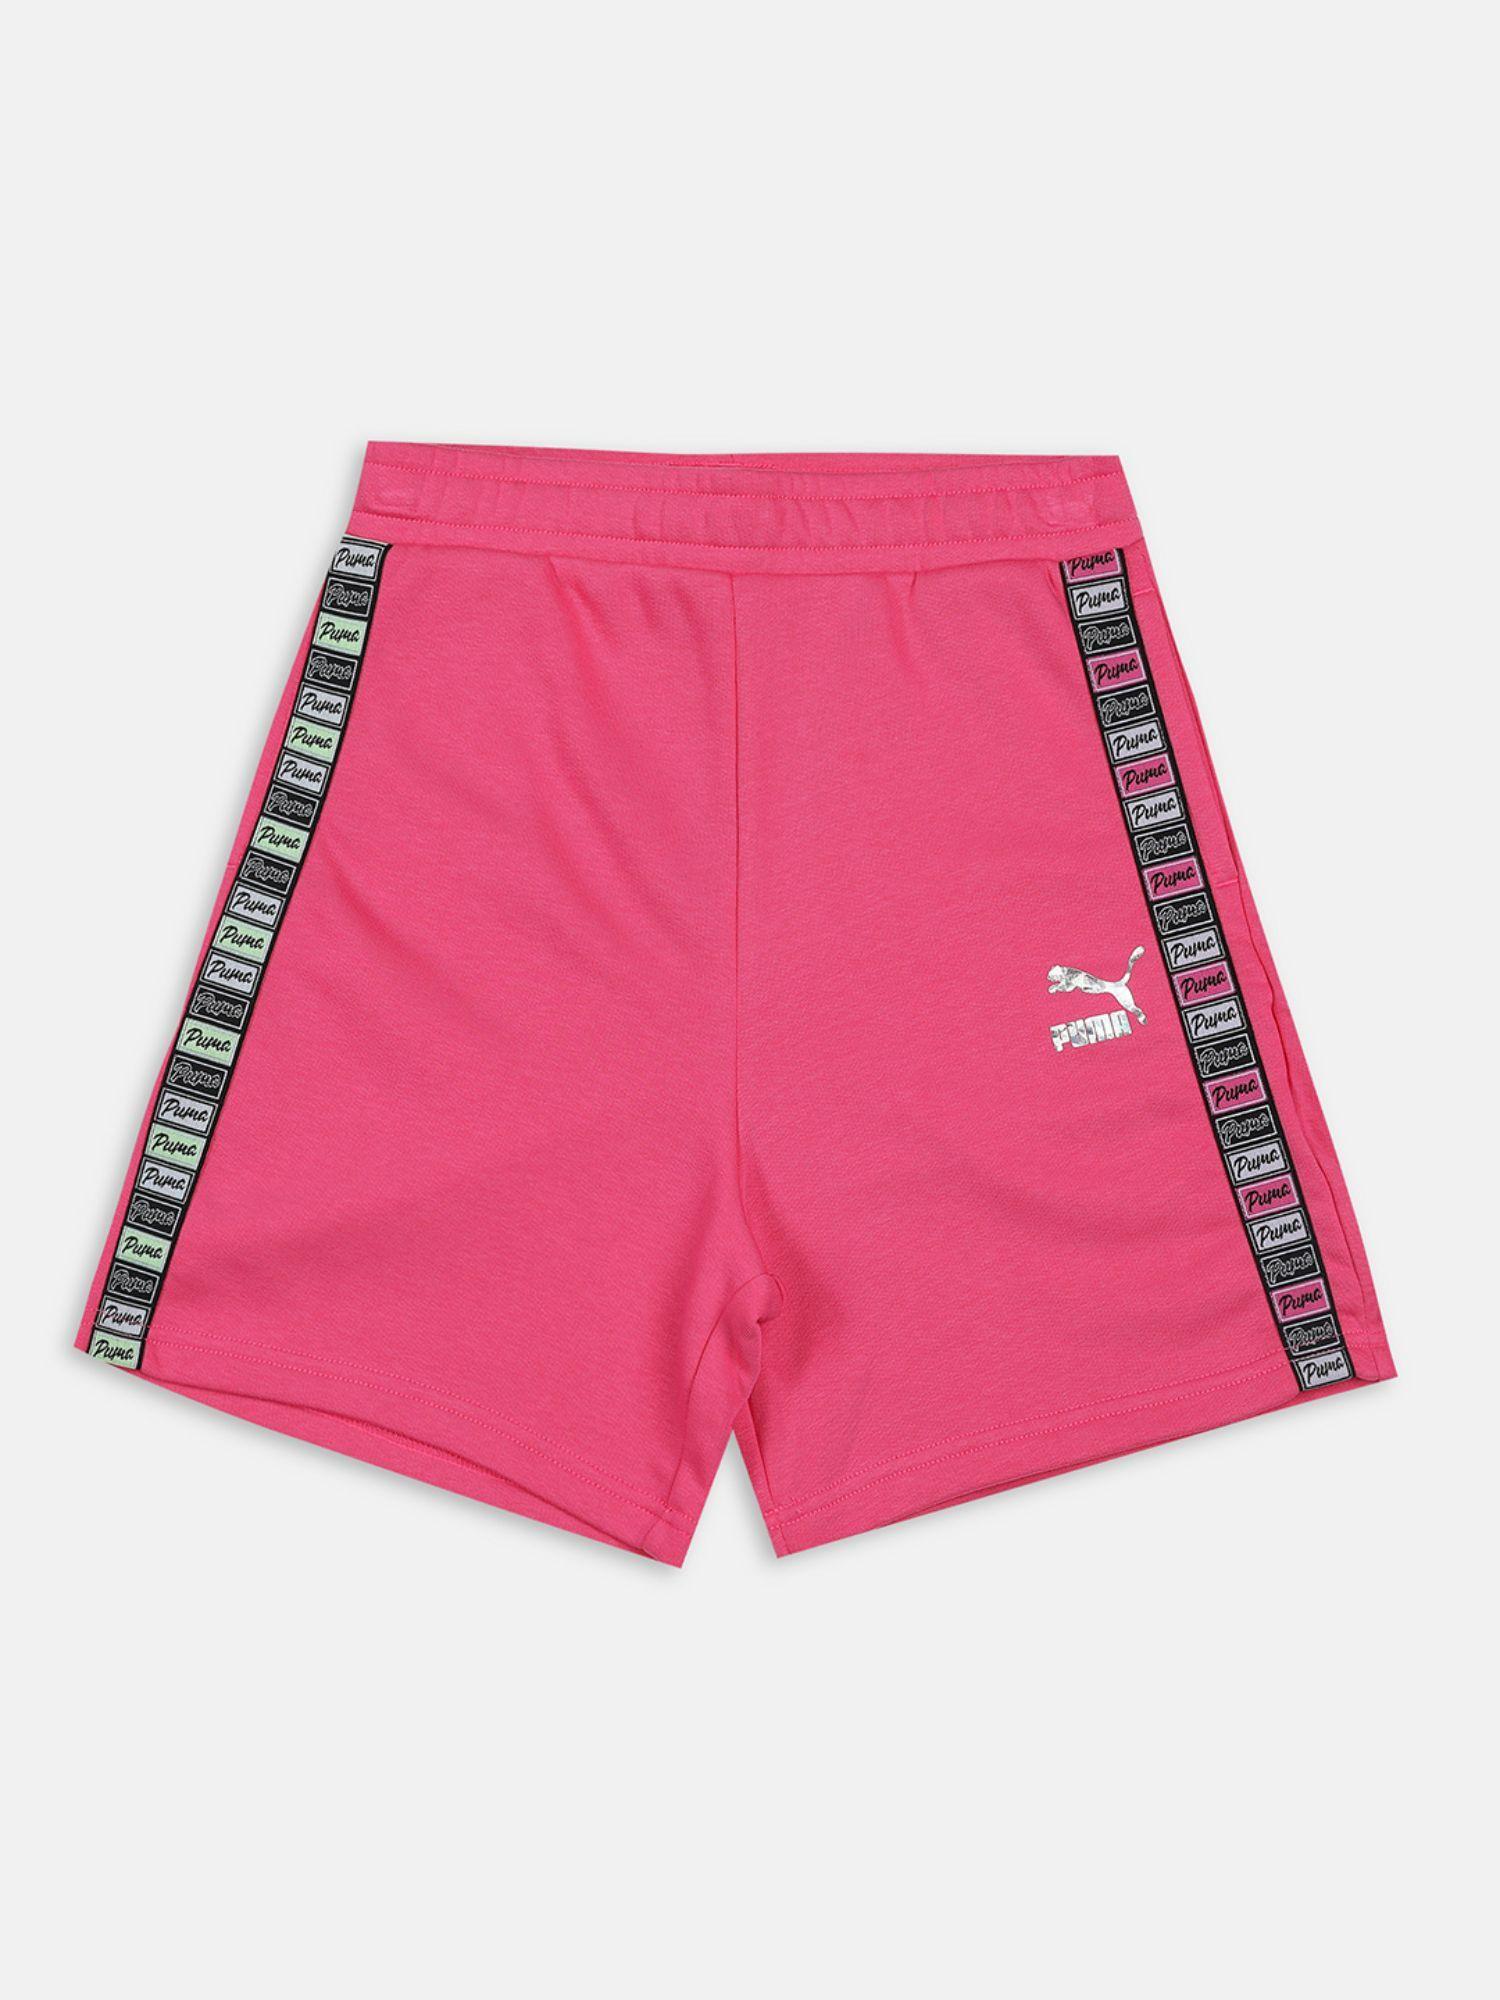 ruleb high waisted girls pink shorts